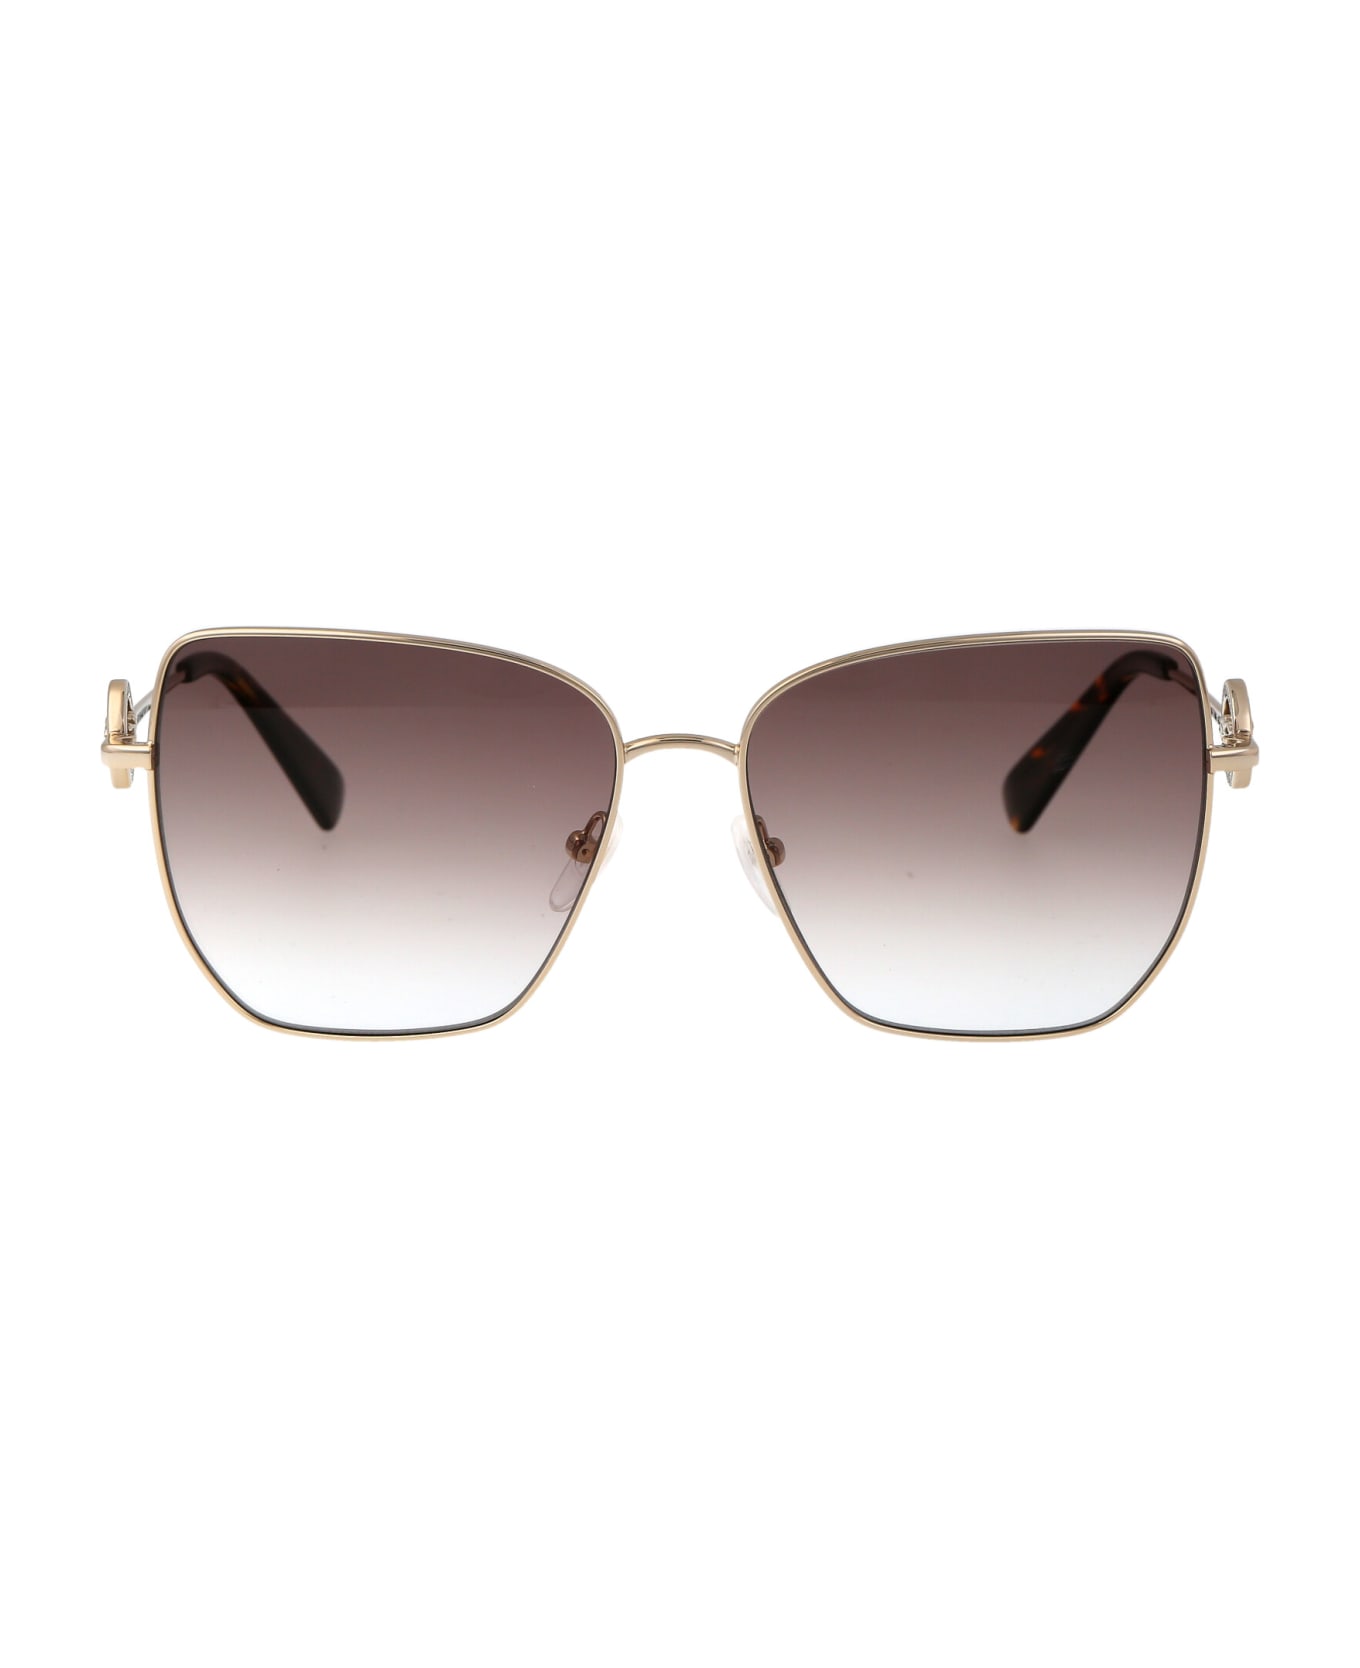 Longchamp Lo169s Sunglasses - 724 GOLD